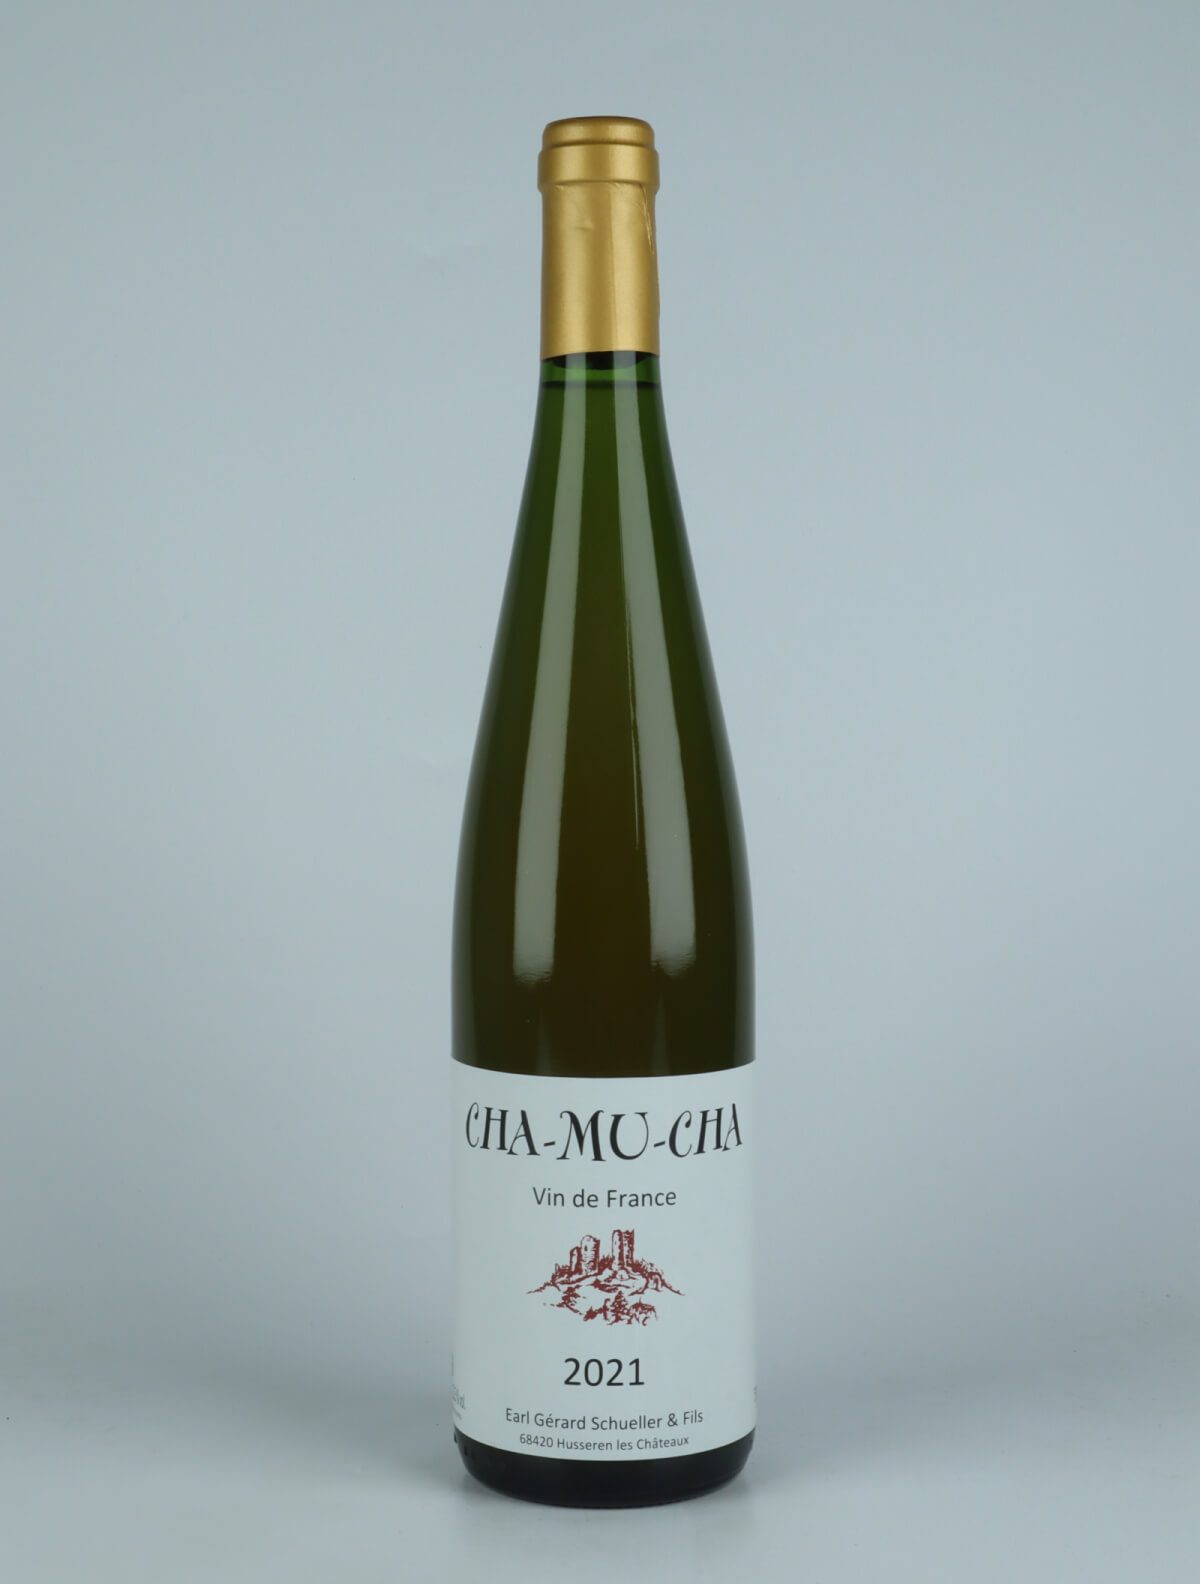 A bottle 2021 CHA-MU-CHA White wine from Gérard Schueller, Alsace in France